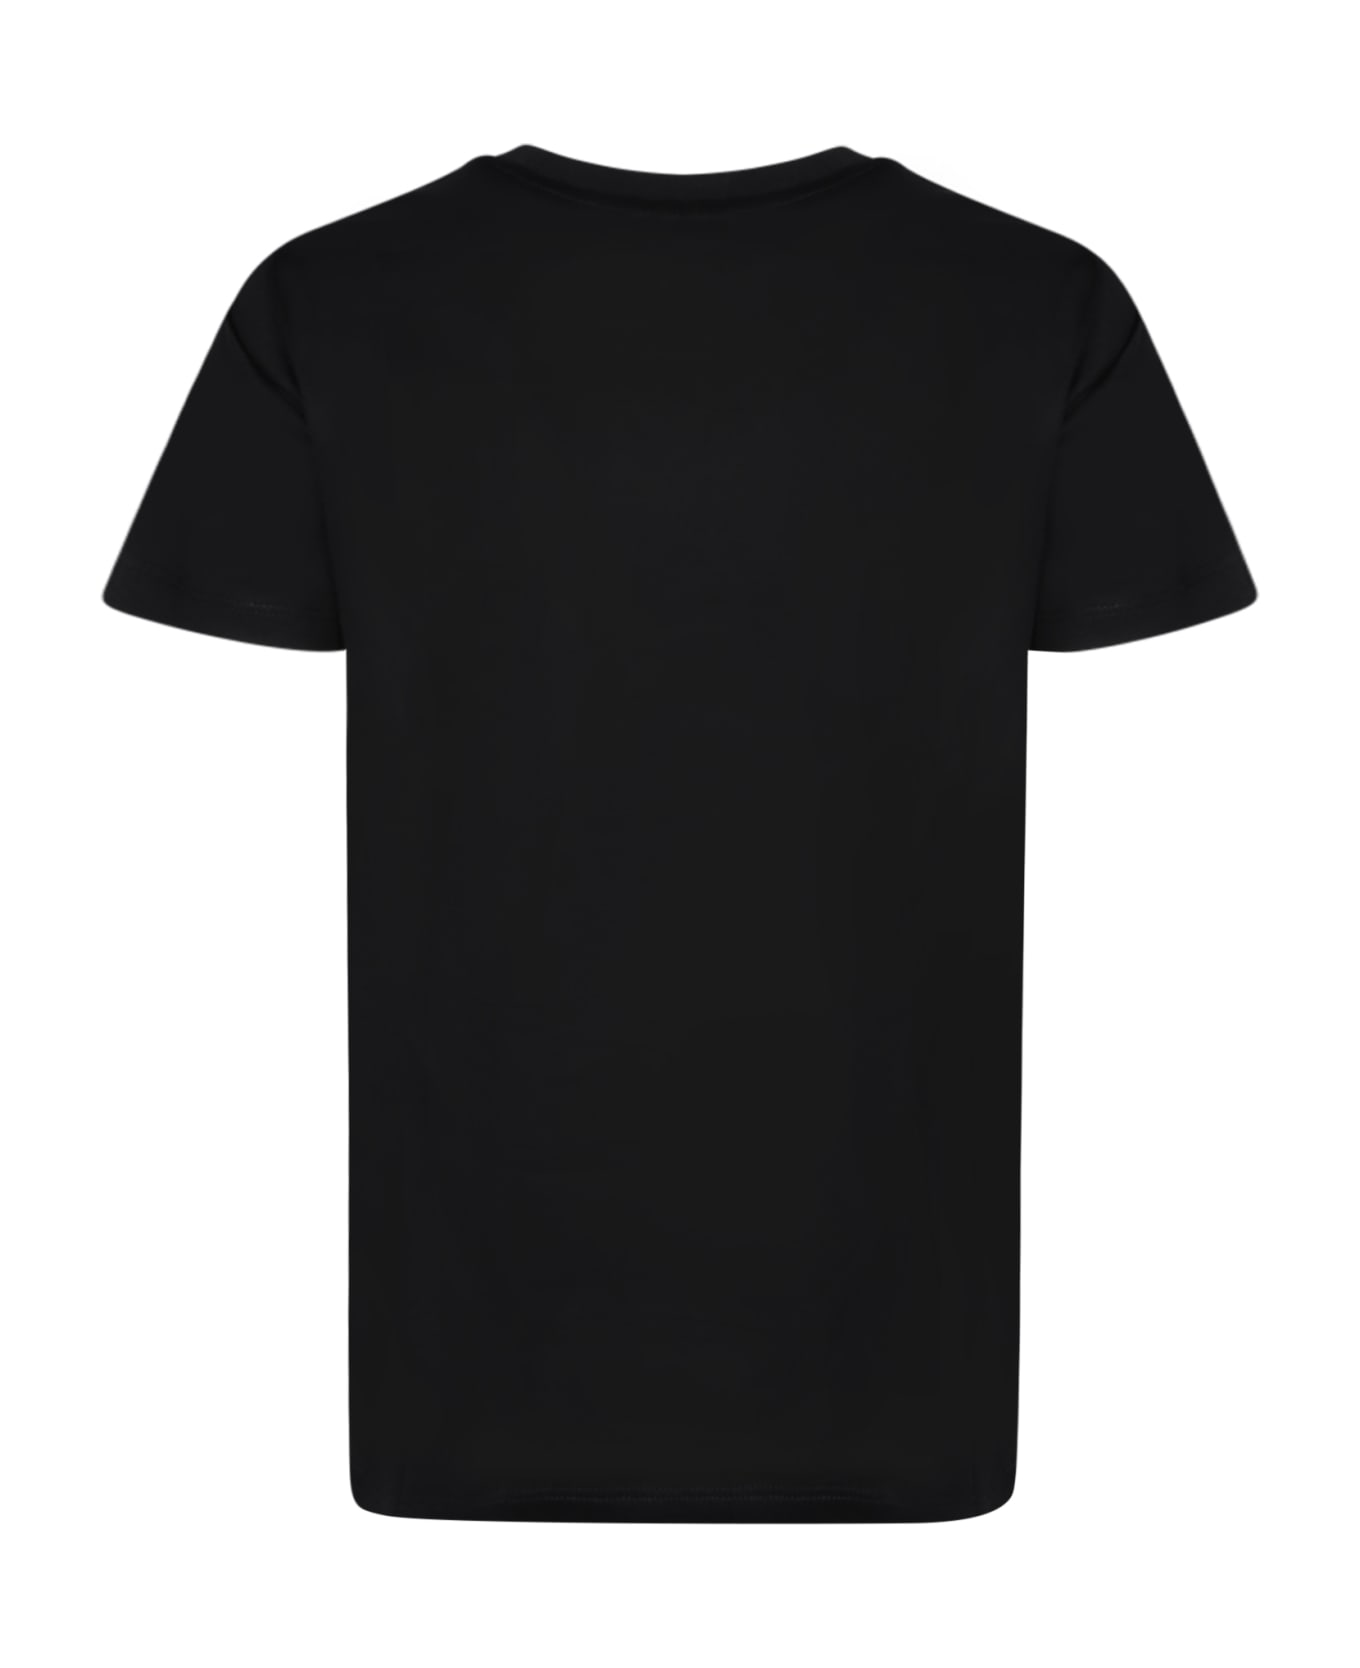 Pinko Quentin Black T-shirt - Black Tシャツ